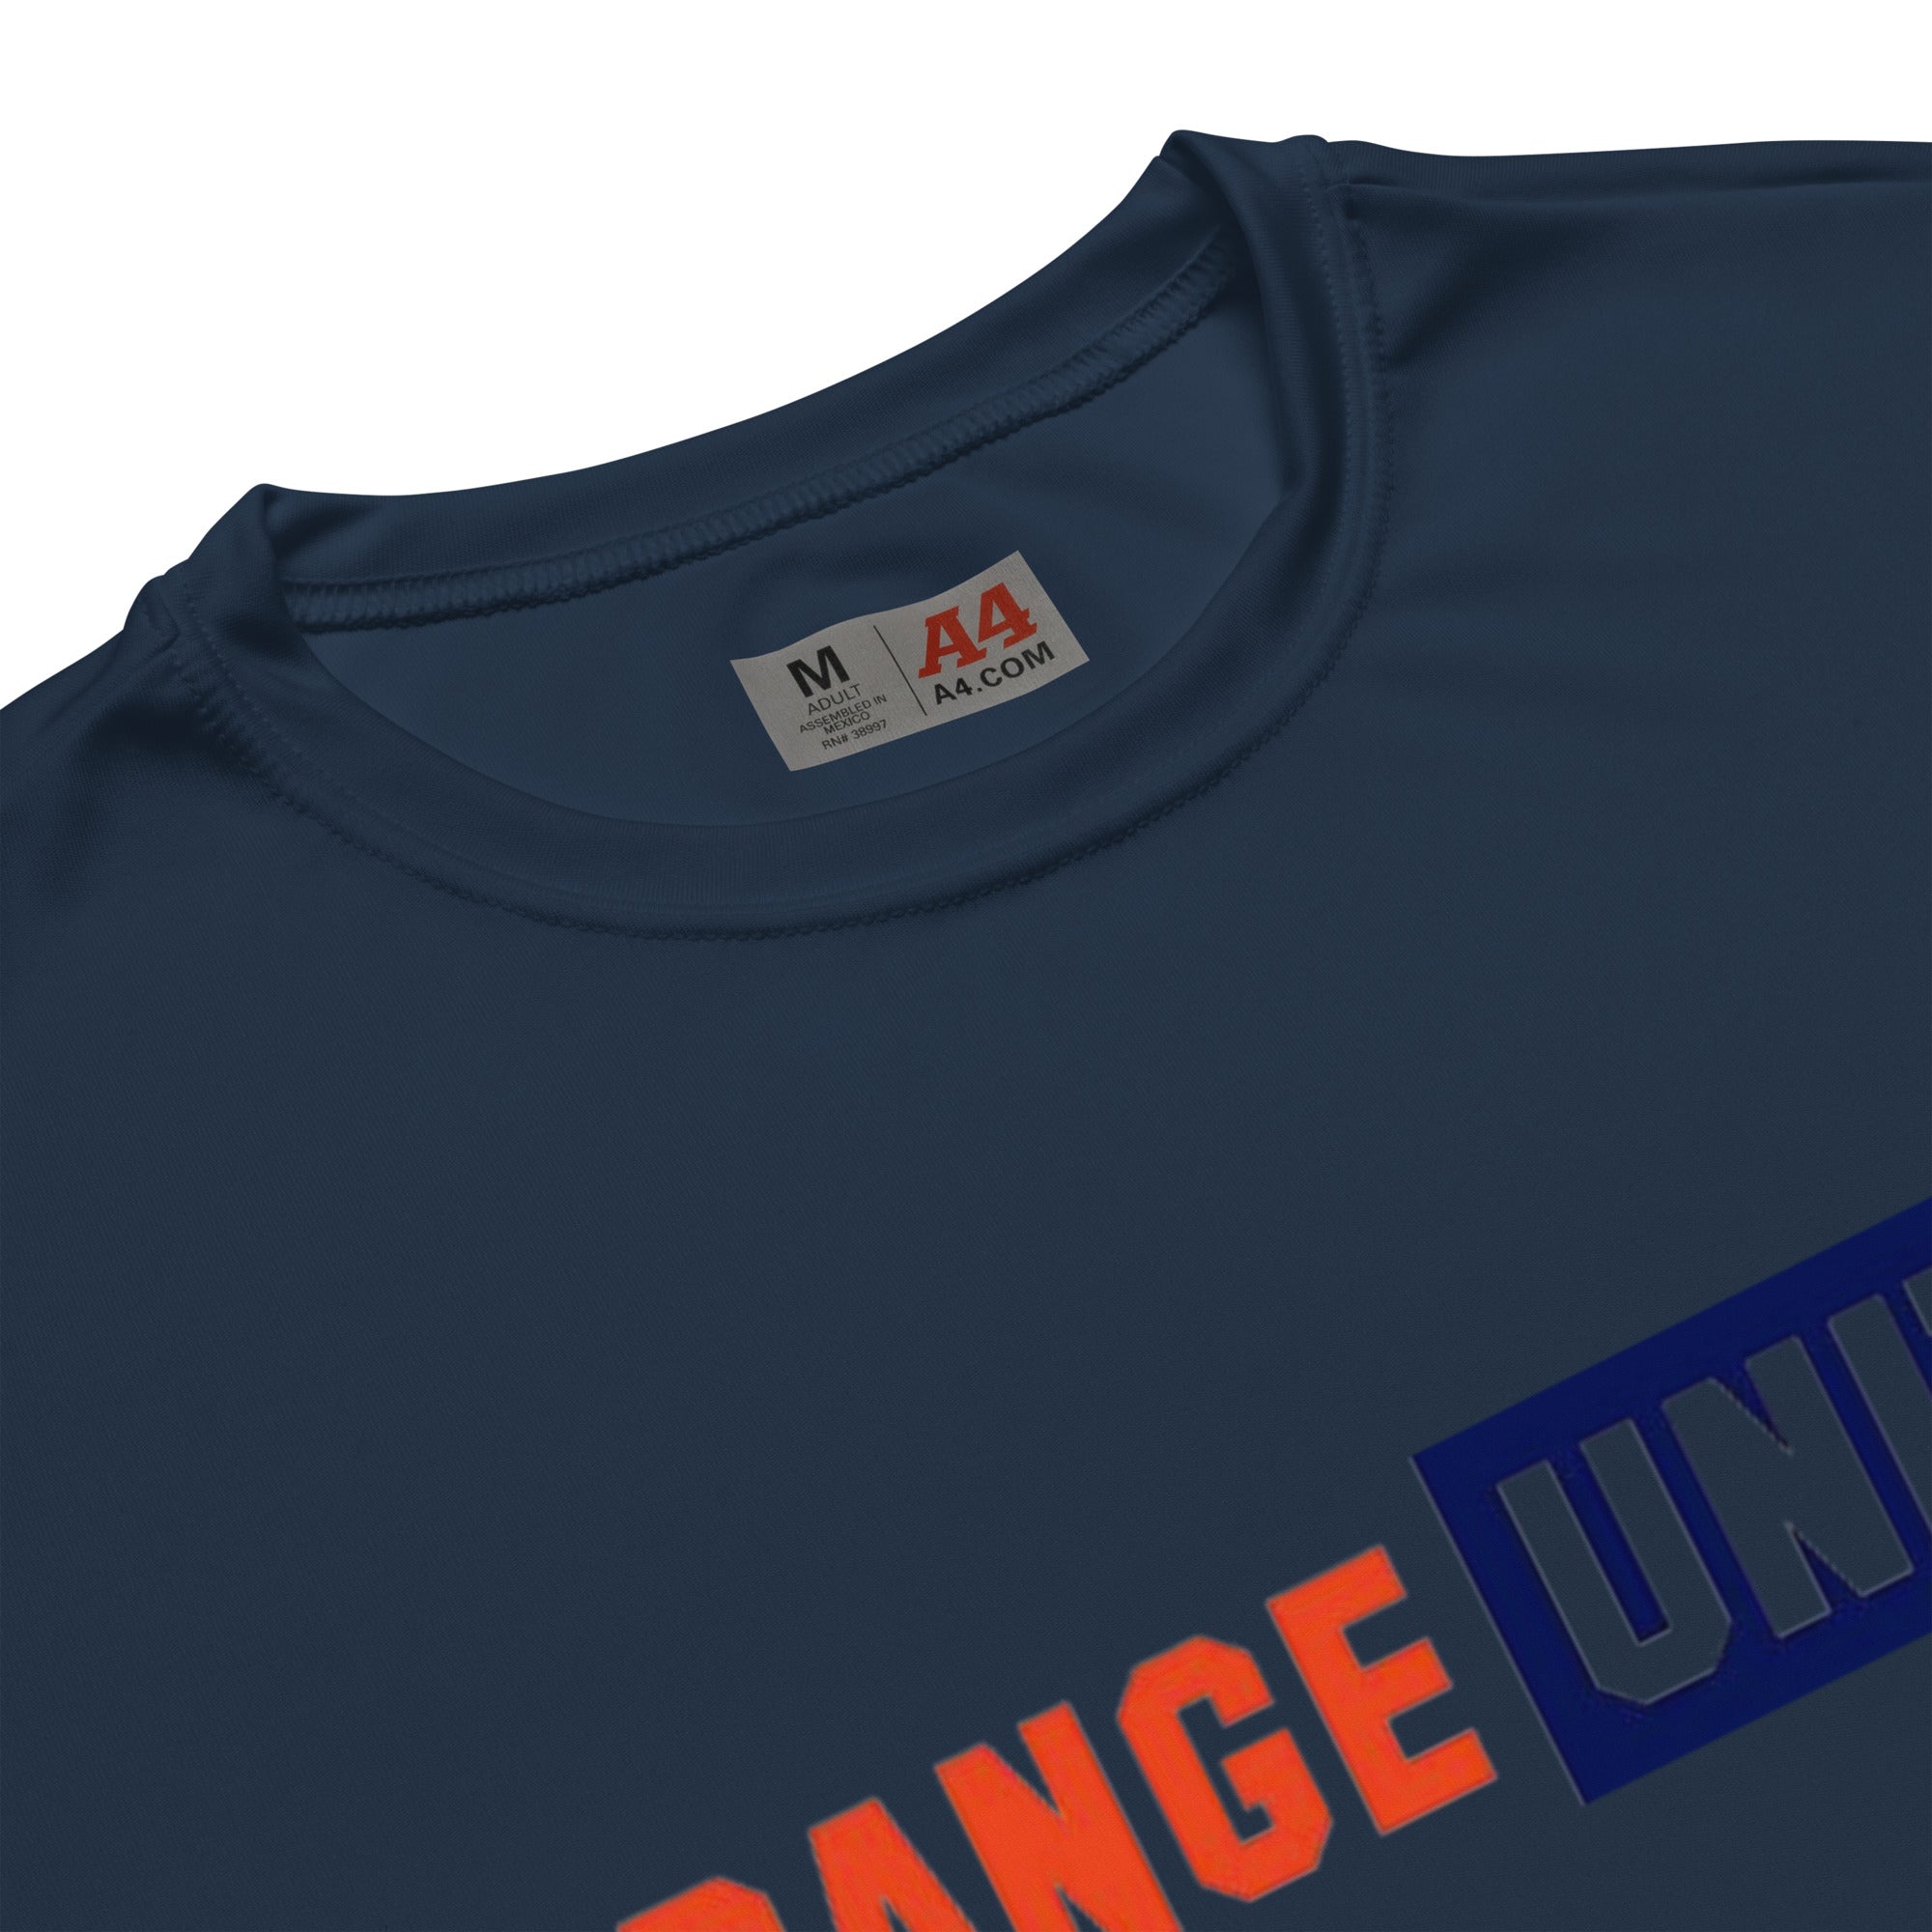 Unisex performance crew neck t-shirt